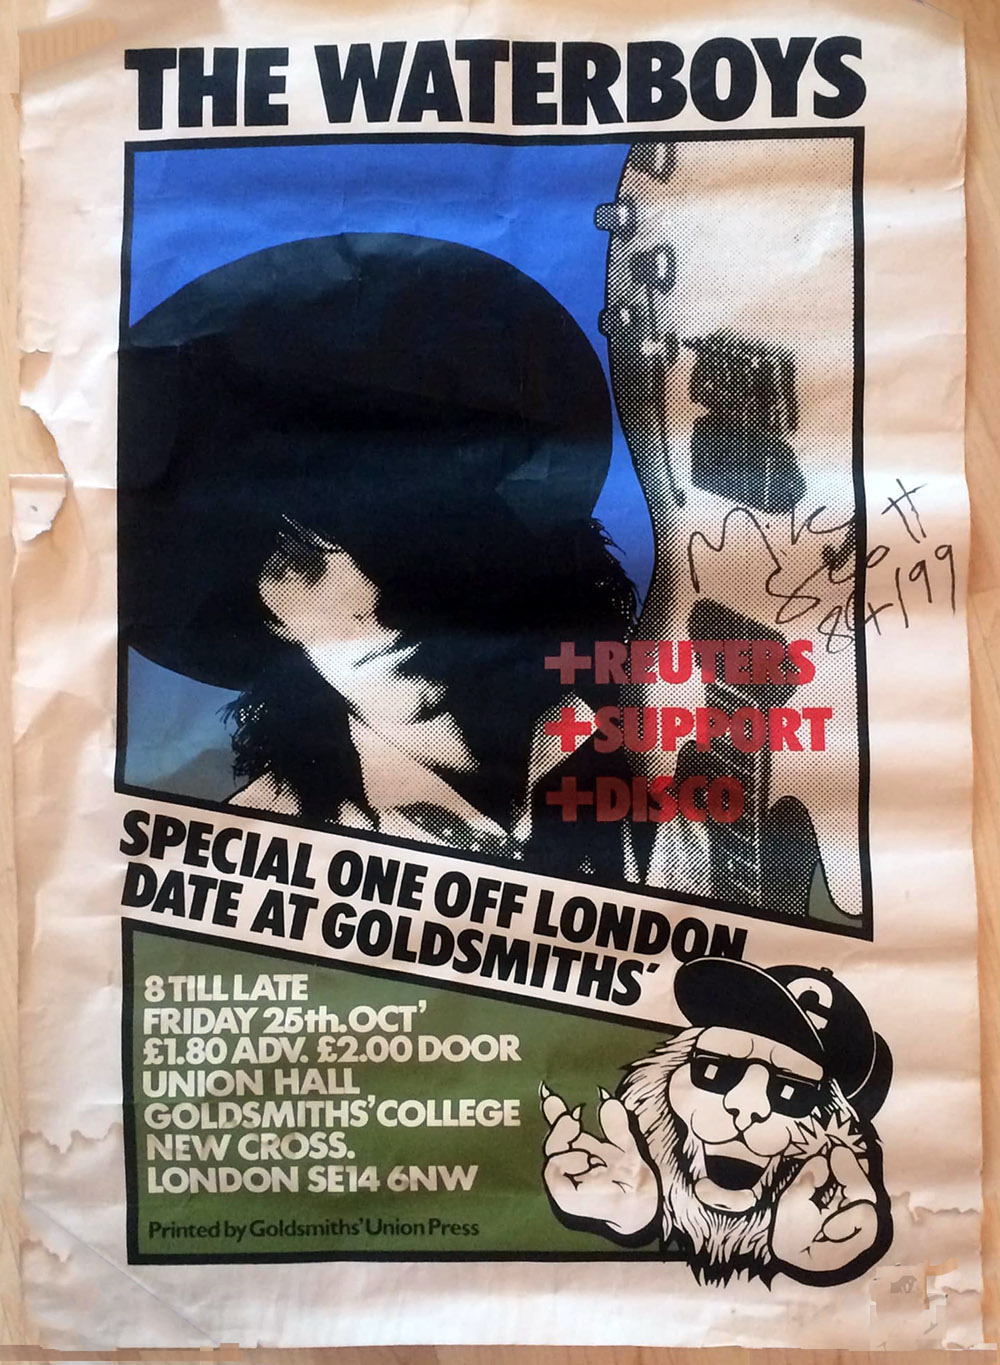 wbs_union_hall_goldsmiths_college_london_poster_1984.jpg